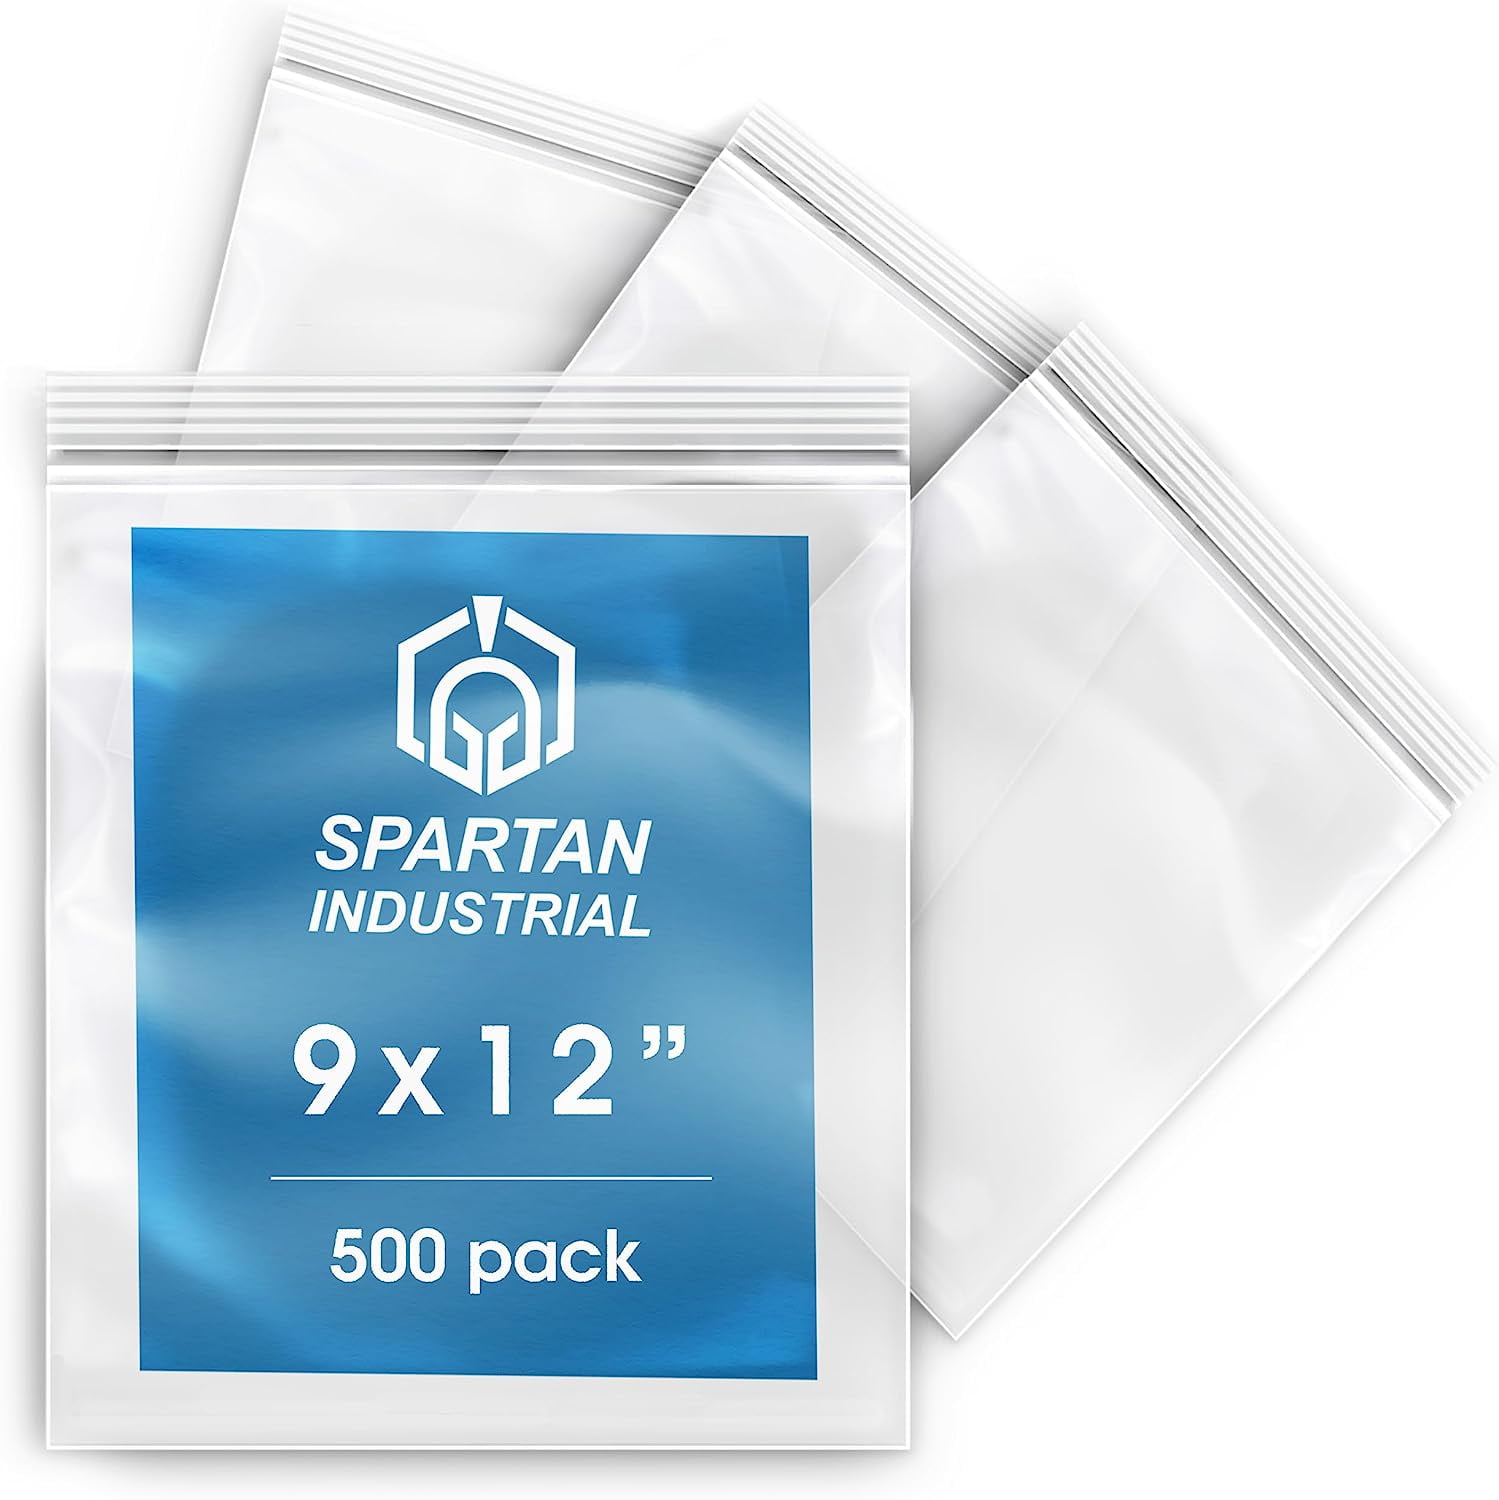 Static Shielding Bag - Reclosable Zip 12 x 12 100 pack SSZ1212 -  DISCONTINUED